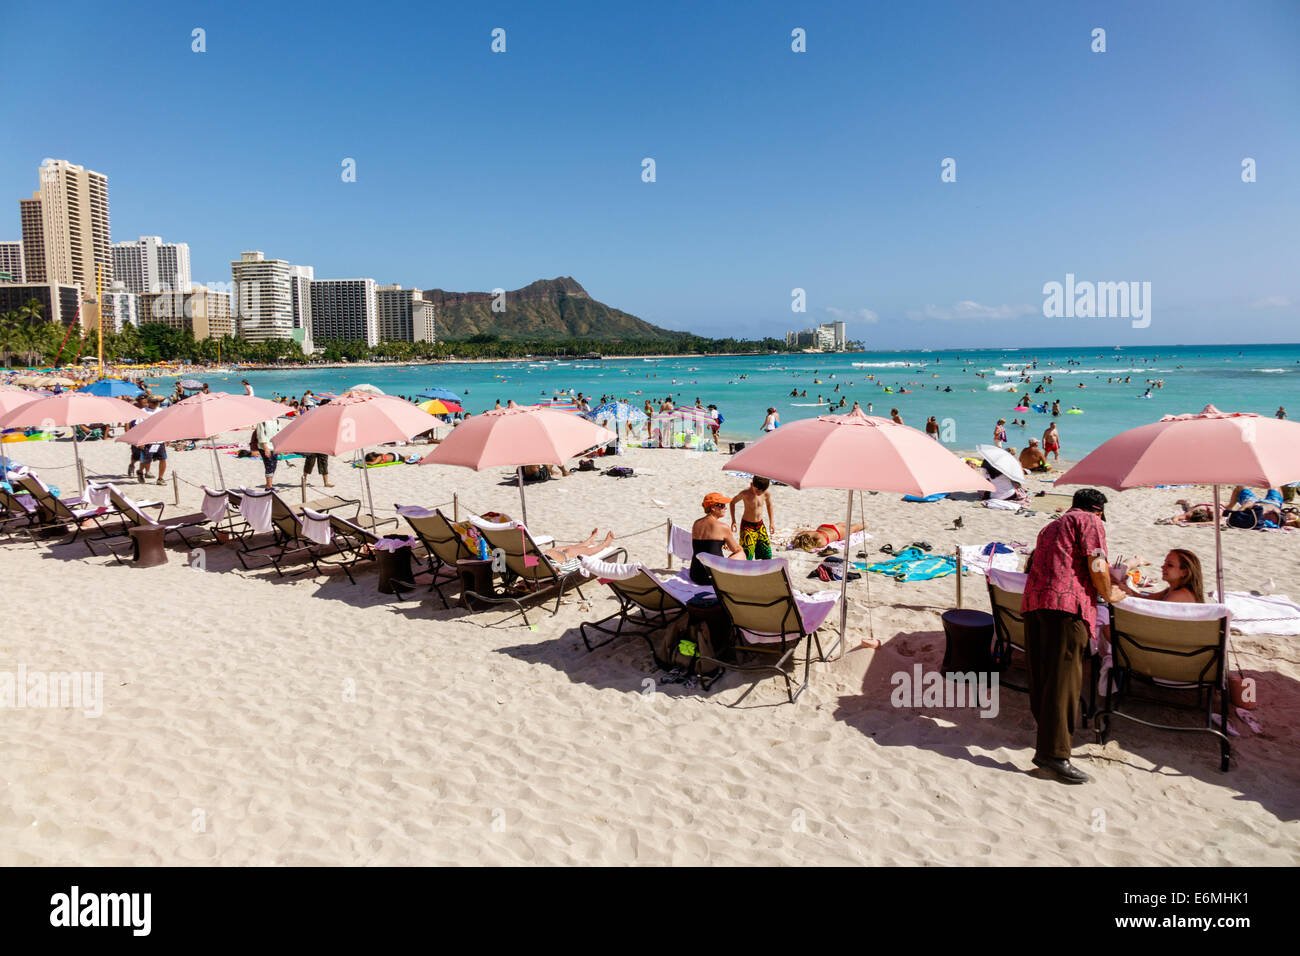 Honolulu Waikiki Beach Hawaii, Hawaiian, Oahu, Pazifischer Ozean, Royal Hawaiian, Hotel, pink, Regenschirme, Diamond Head Crater, erloschener Vulkan, Berg, Sonnenanbeter, Stockfoto